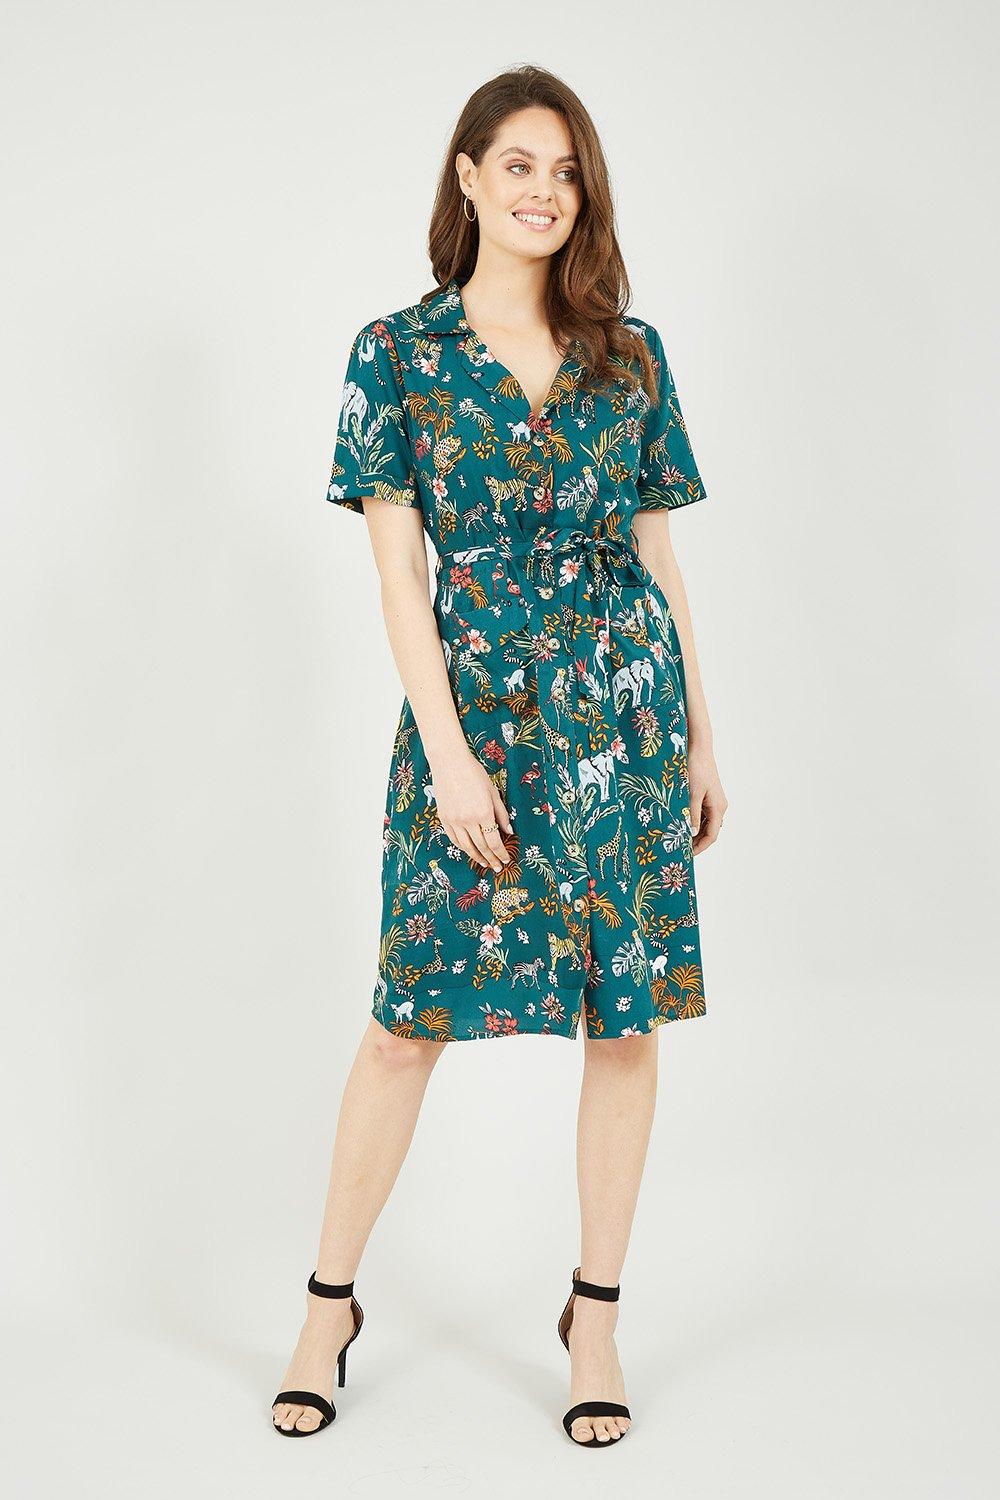 Dresses | Green Animal Print Kingdom Print Shirt Dress | Yumi